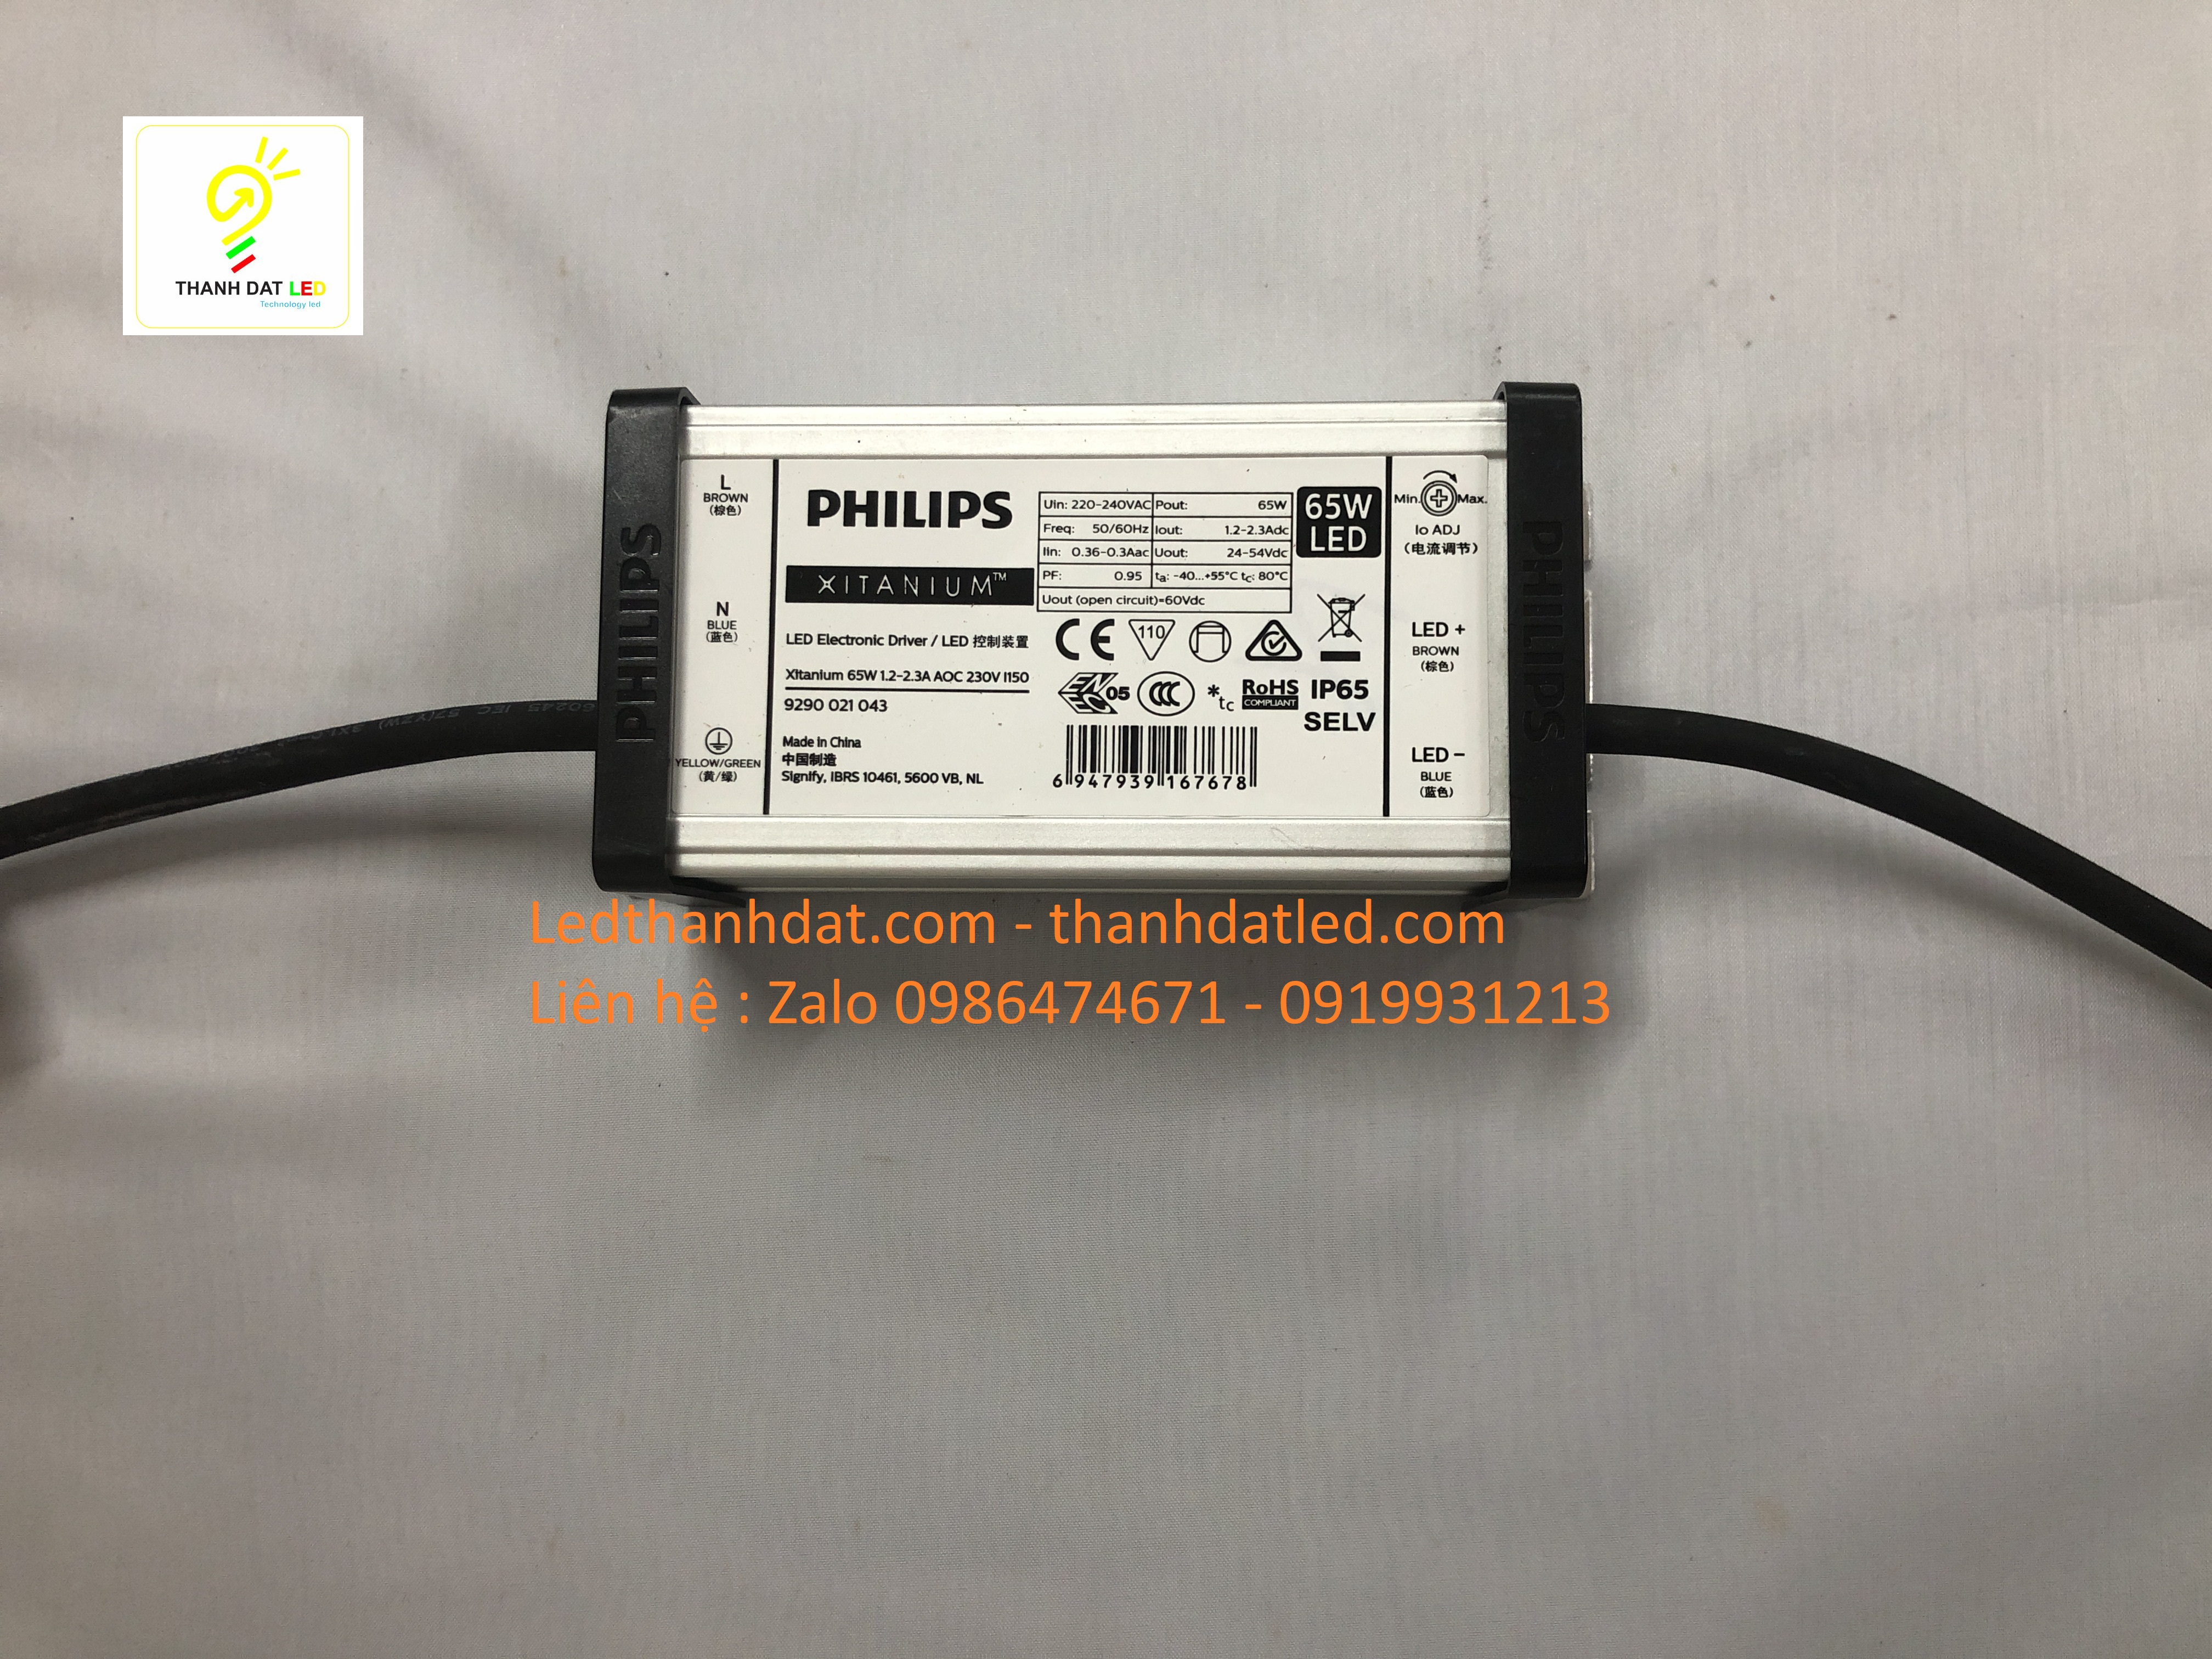 Nguồn Philips 65w Xitanium AOC